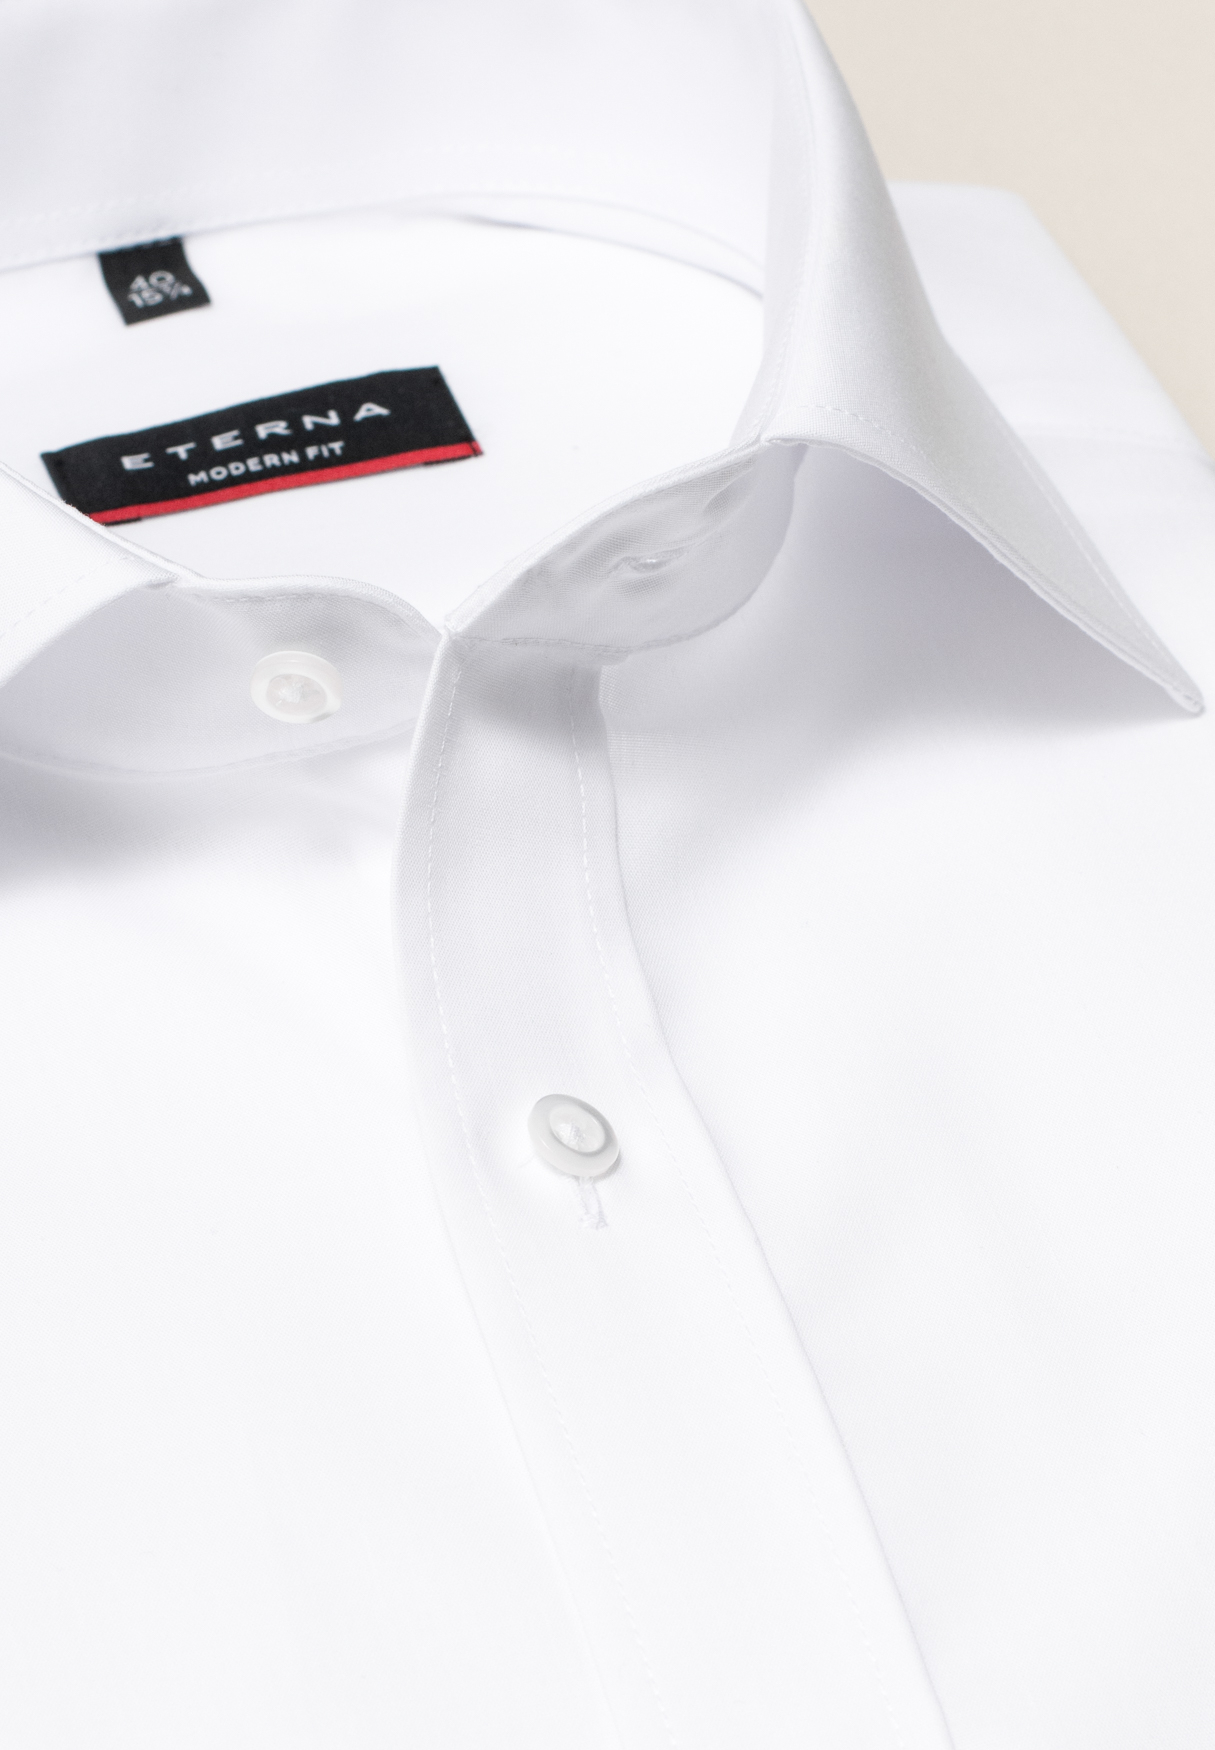 MODERN FIT Original Shirt in weiß unifarben | weiß | 41 | Langarm |  1SH00113-00-01-41-1/1